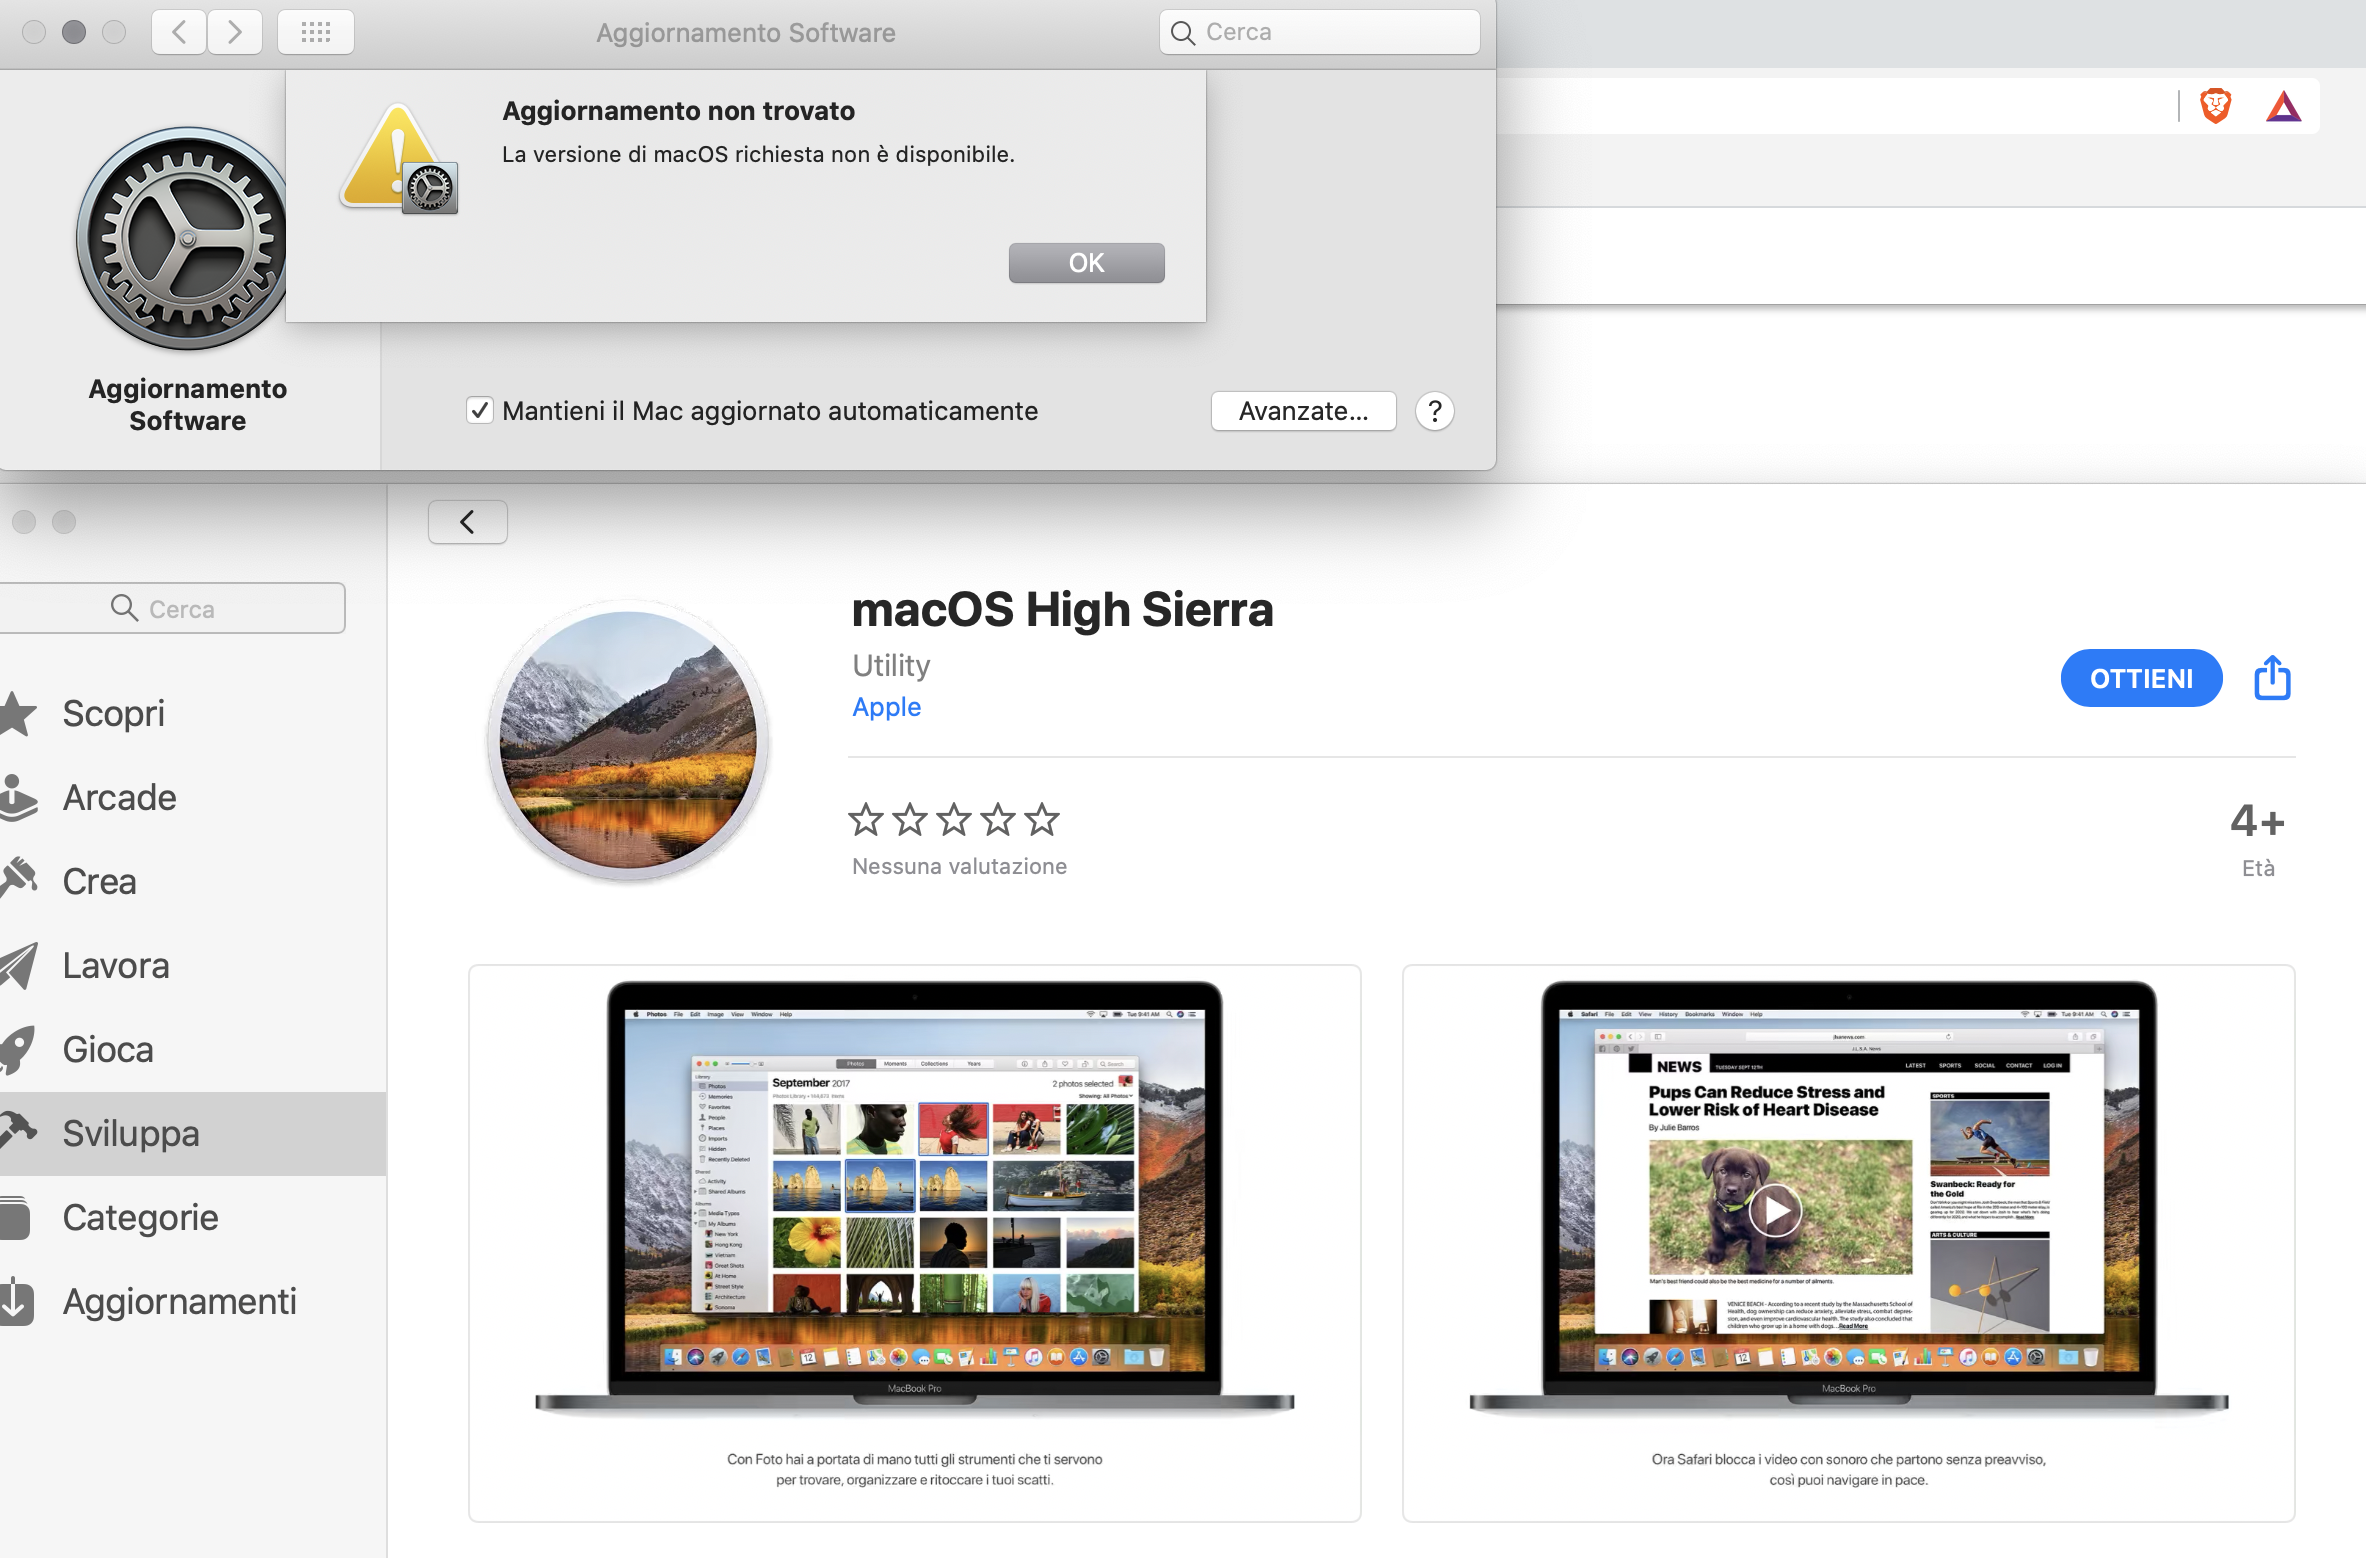 macos high sierra 10.13 6 full installer download